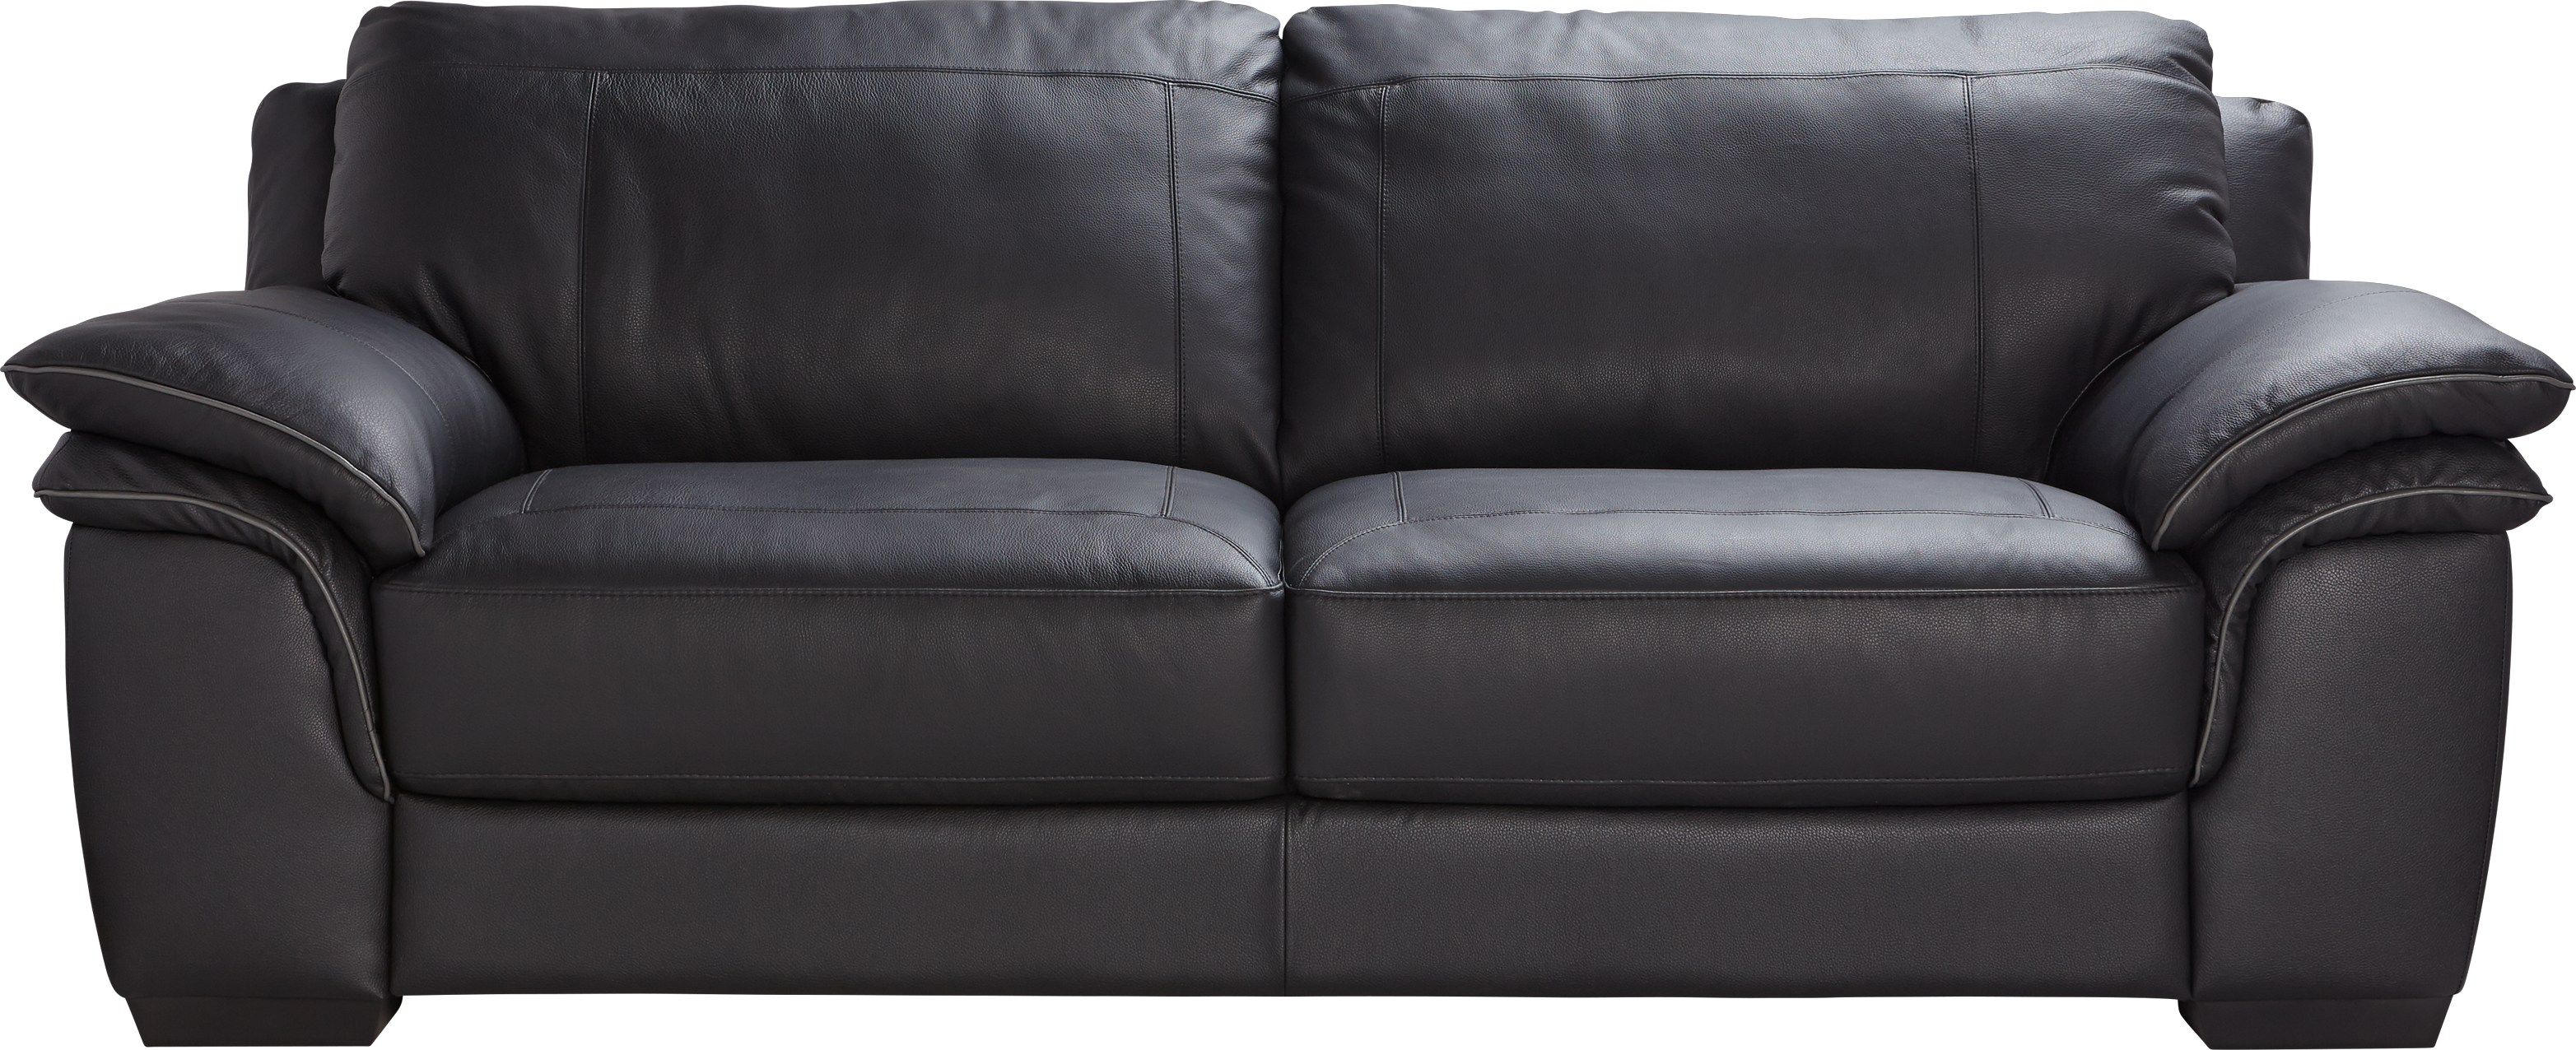 Cindy Crawford Home Grand Palazzo Black Leather Sofa - Leather Sofas (Black)